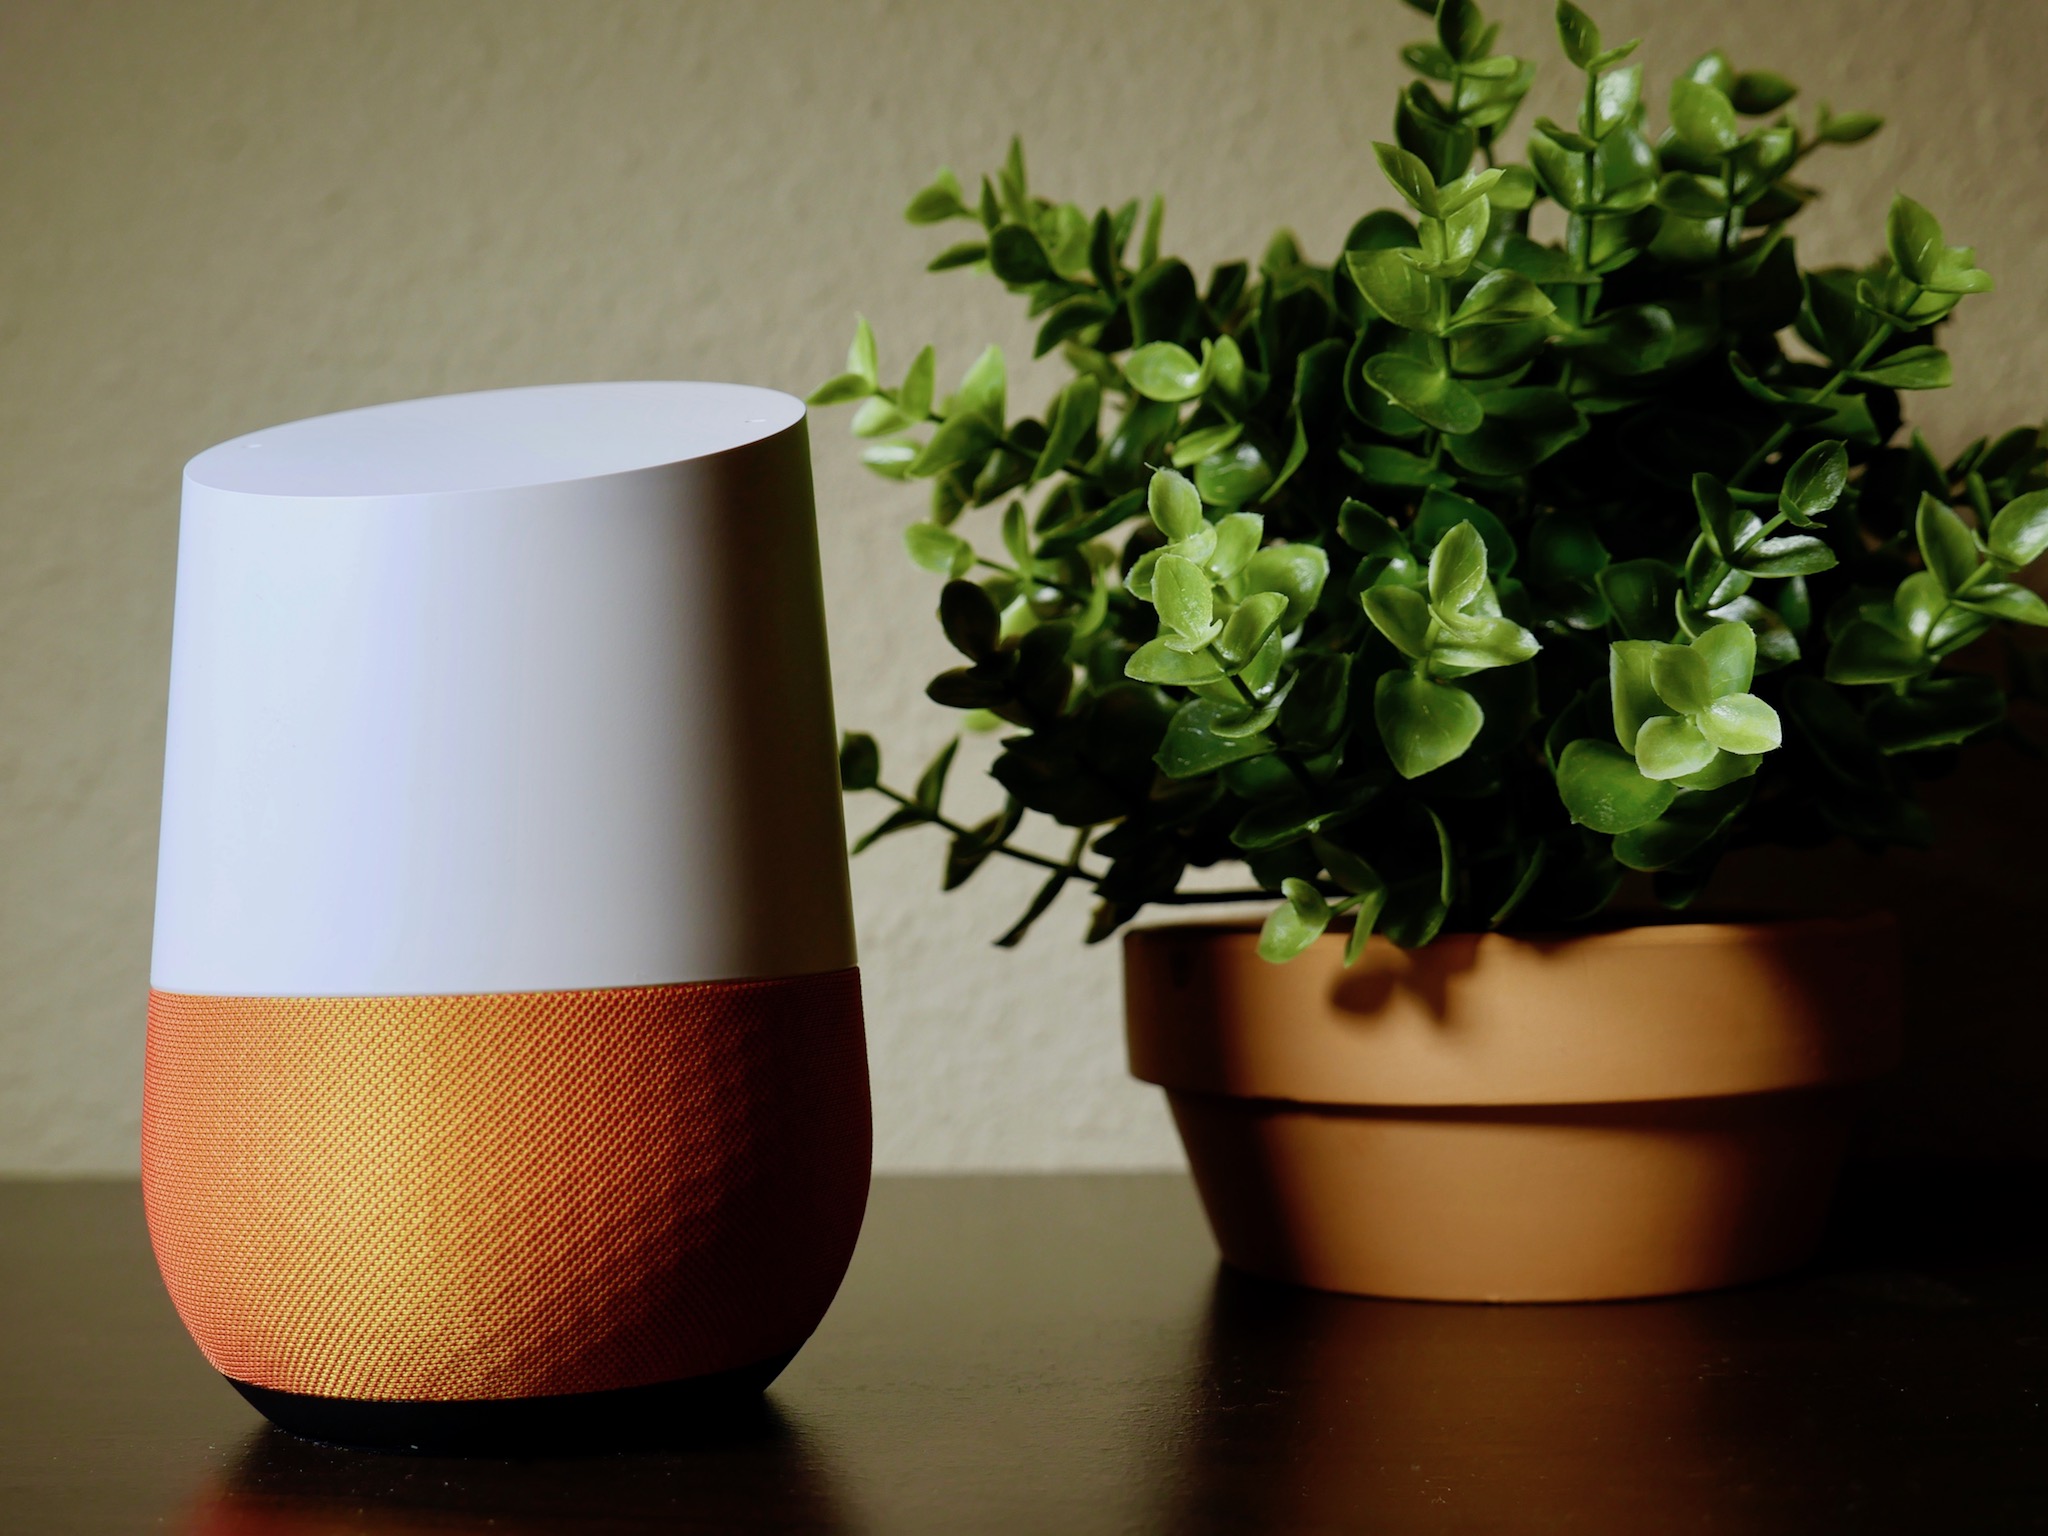 A Google Home smart speaker sits beside a succulent plant in a stucco pot